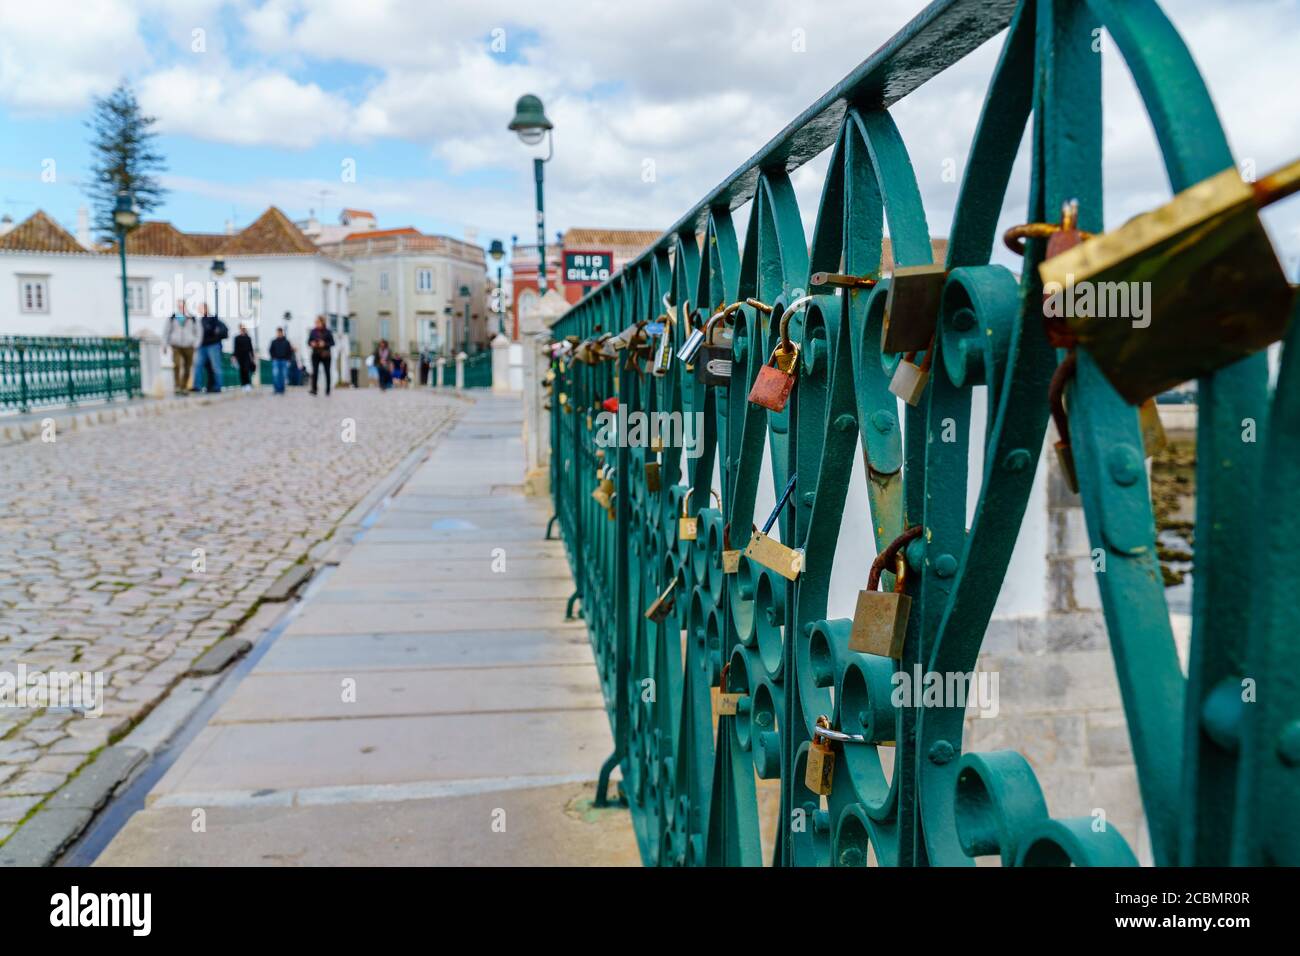 Tavira, Portugal - March 24, 2018: Love locks hanging on bridge railing. Loving couples attach padlocks as symbol of eternal love. Stock Photo